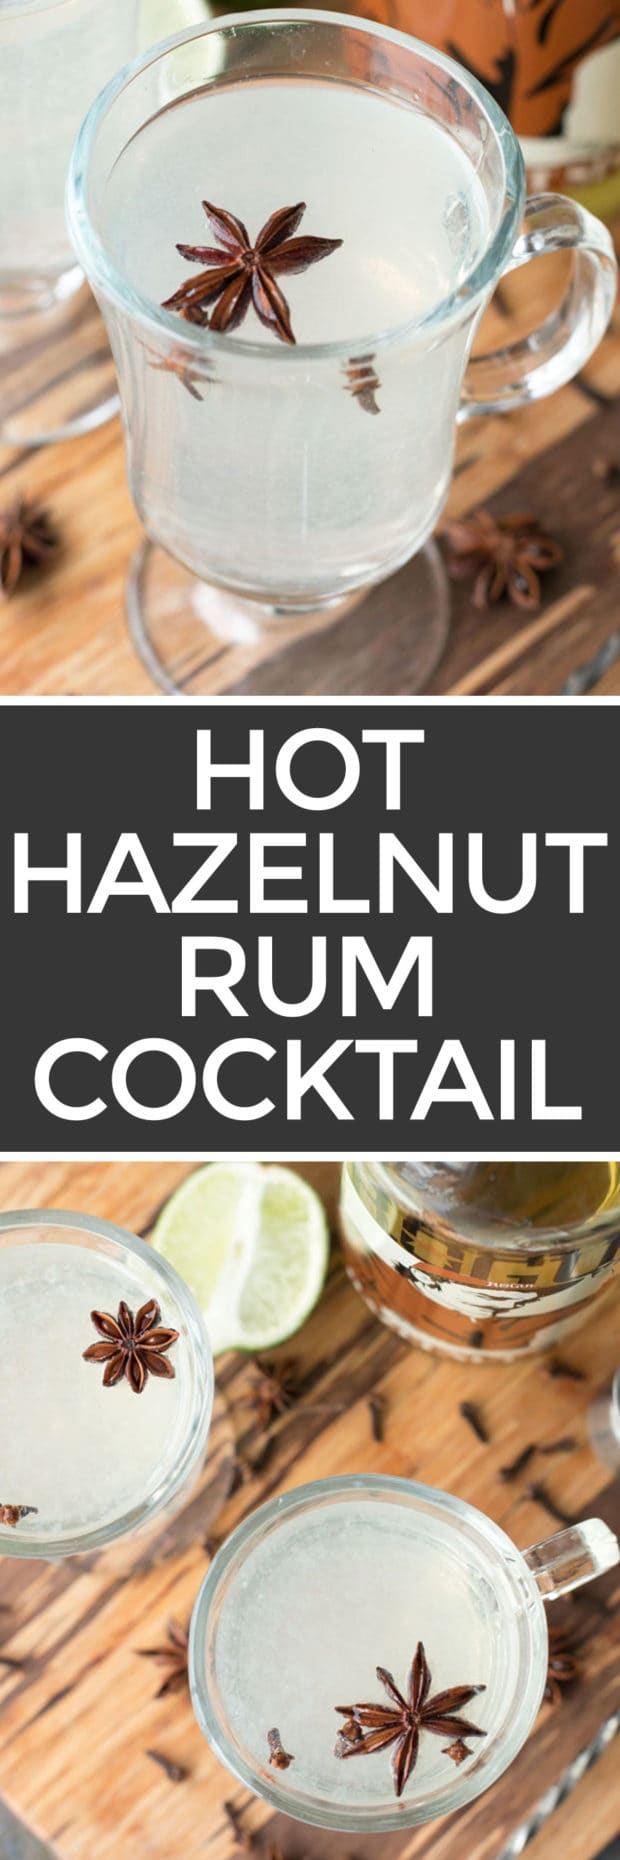 Hot Hazelnut Rum Cocktail | Cake 'n Knife